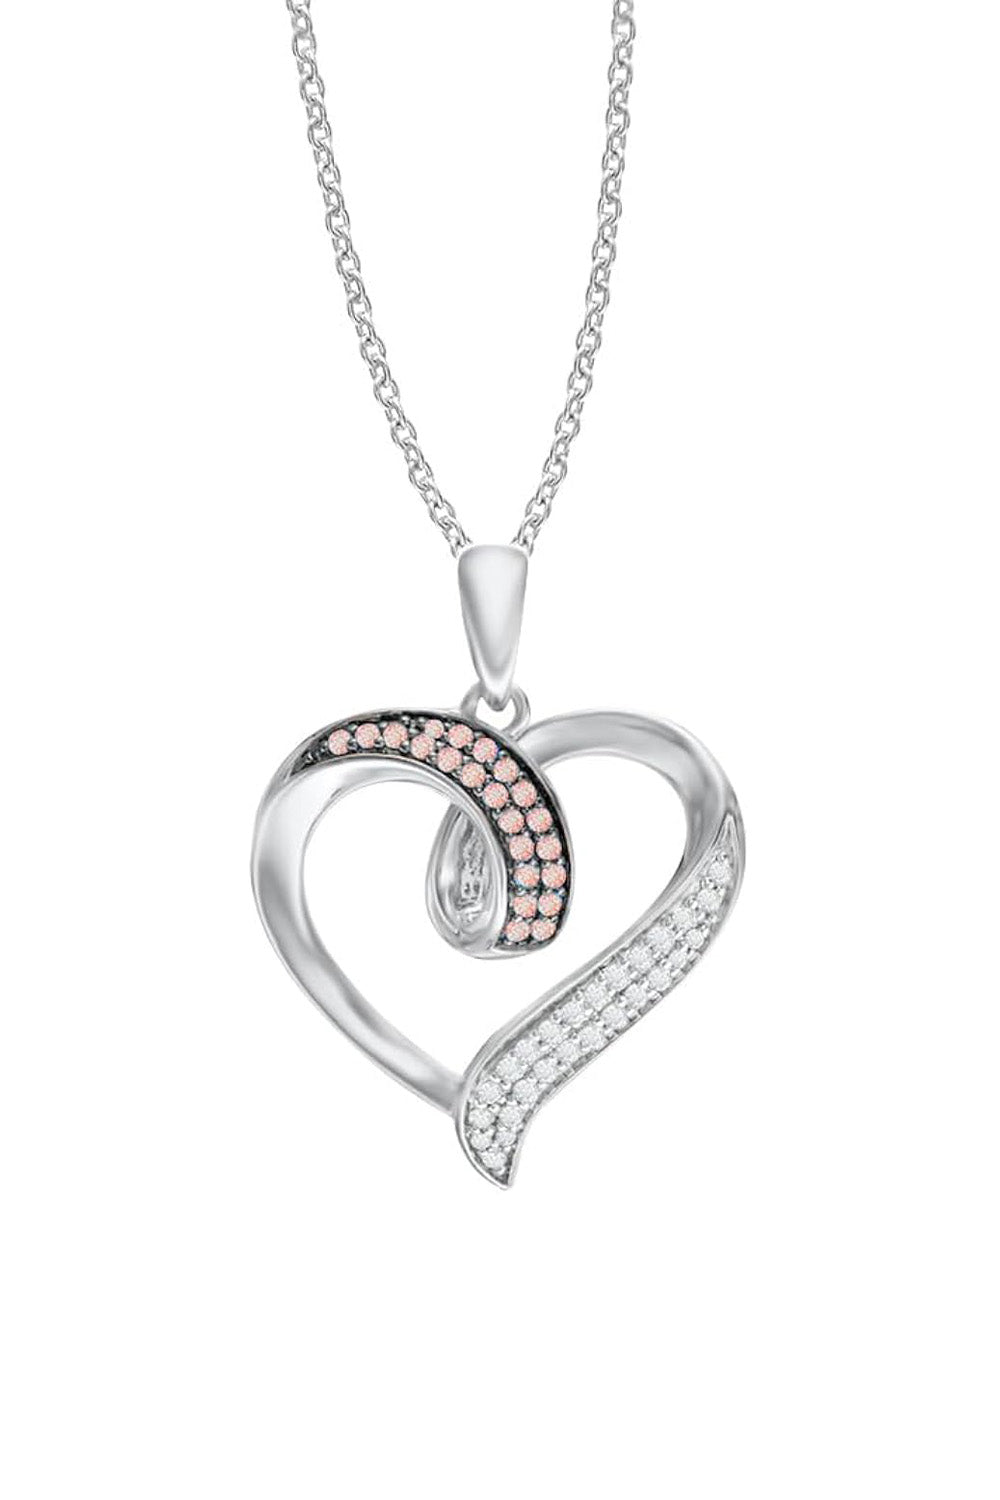 White Gold Color Love Heart Pendant Necklace, Pendant For Women